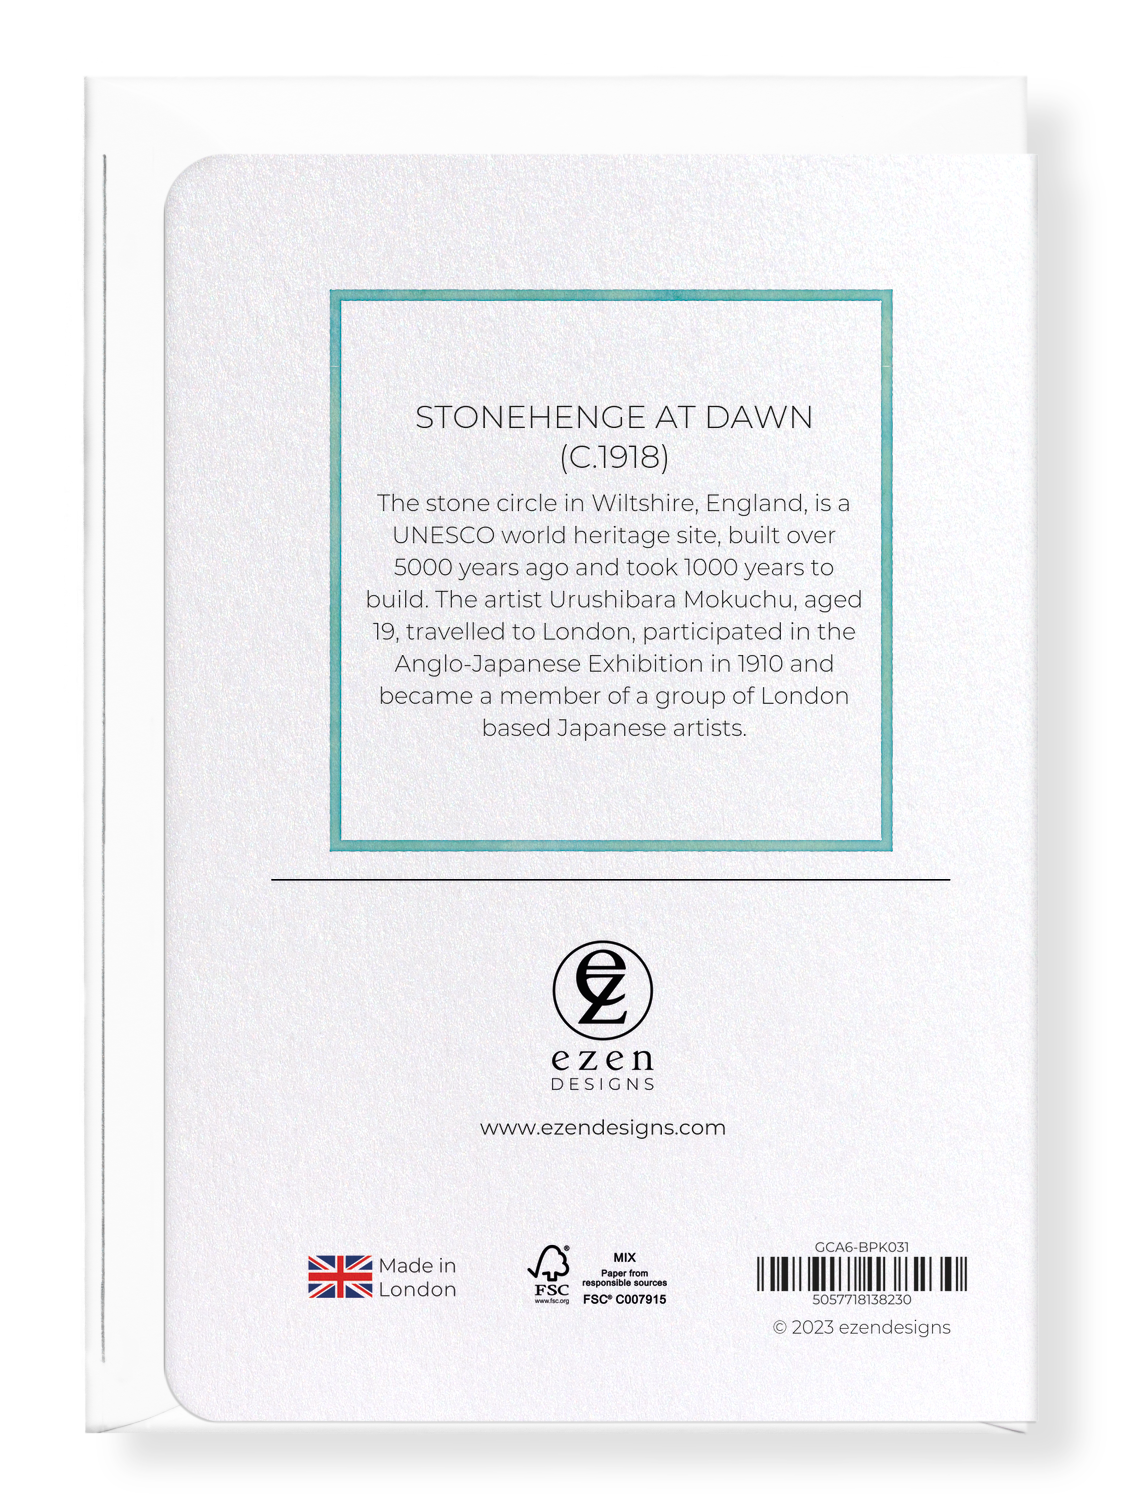 Ezen Designs - Stonehenge at dawn (c.1918) - Greeting Card - Back